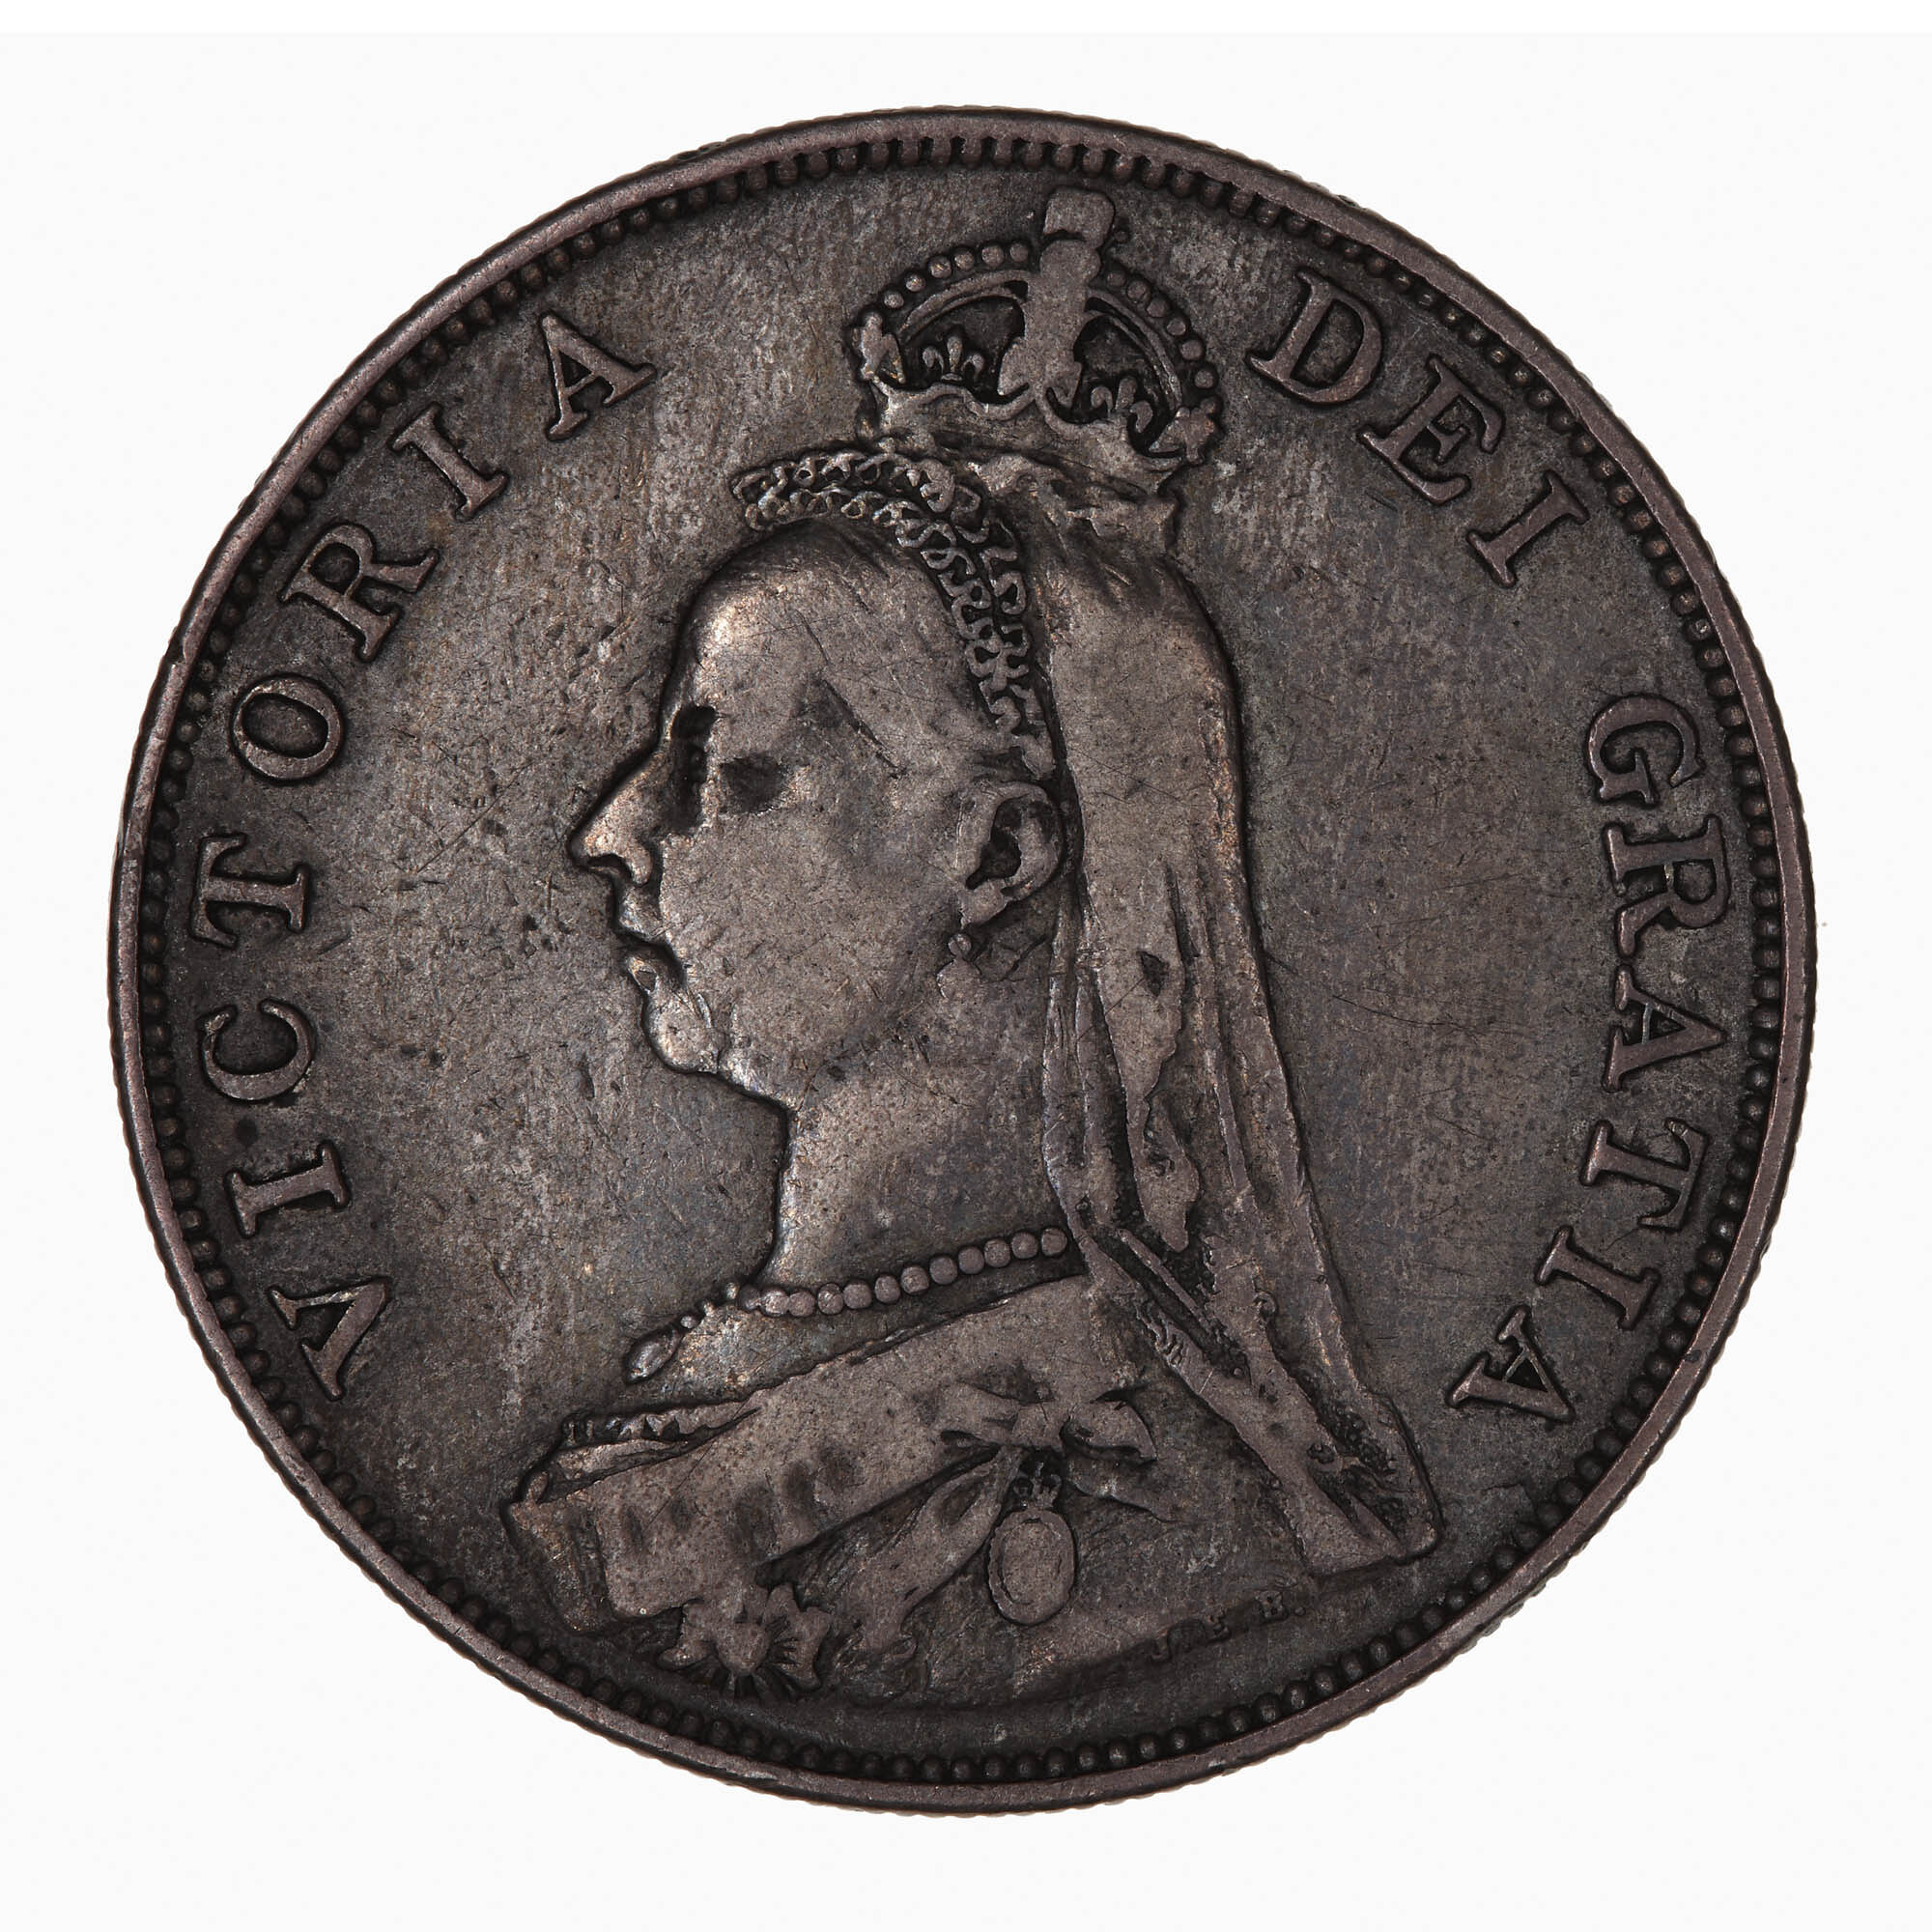 Coin - Double-florin, Queen Victoria, Great Britain, 1889